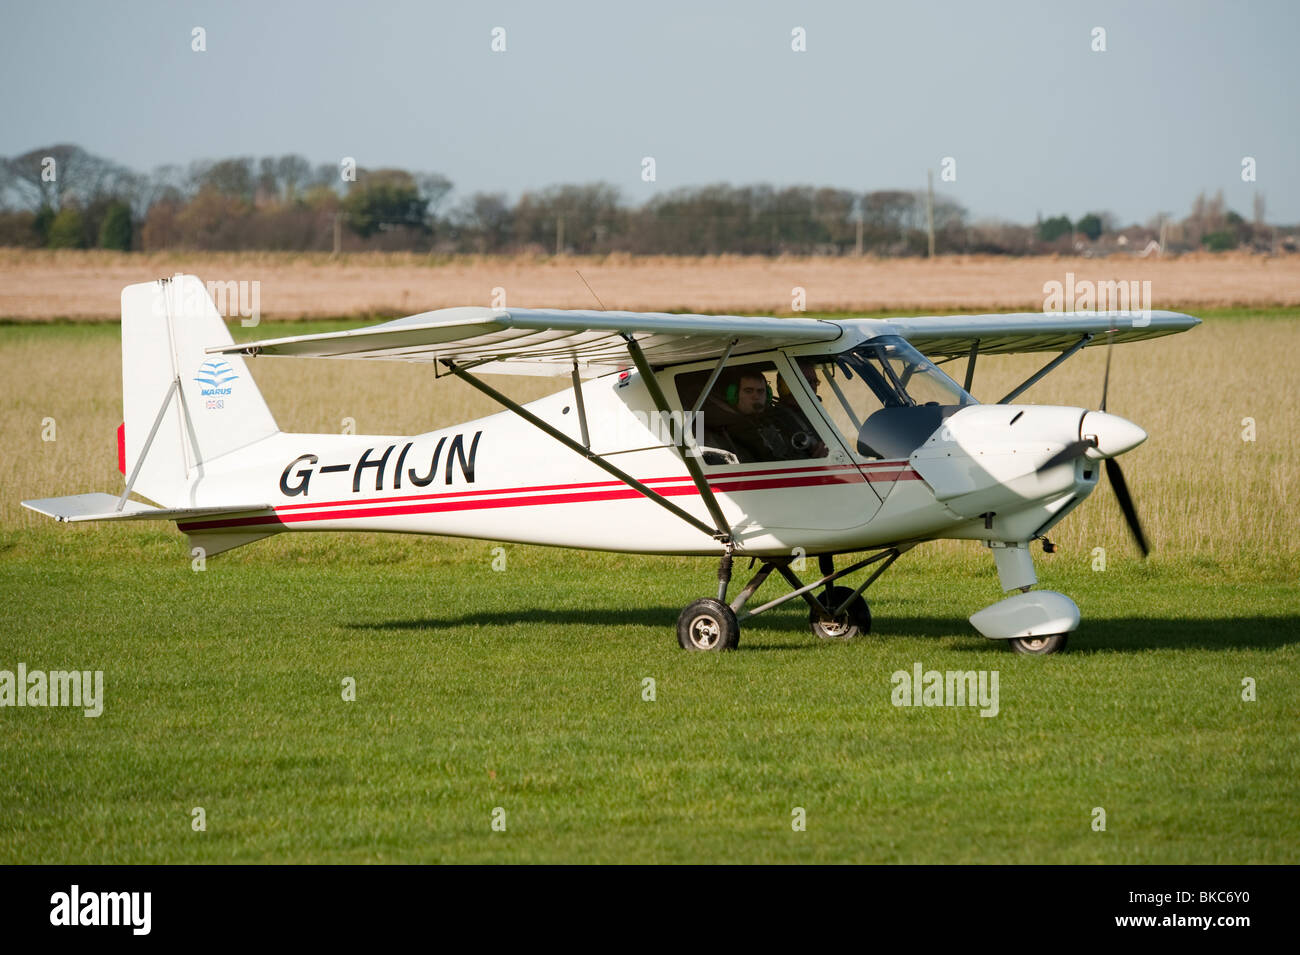 IKARUS C42 FB100 small microlight airplane Stock Photo